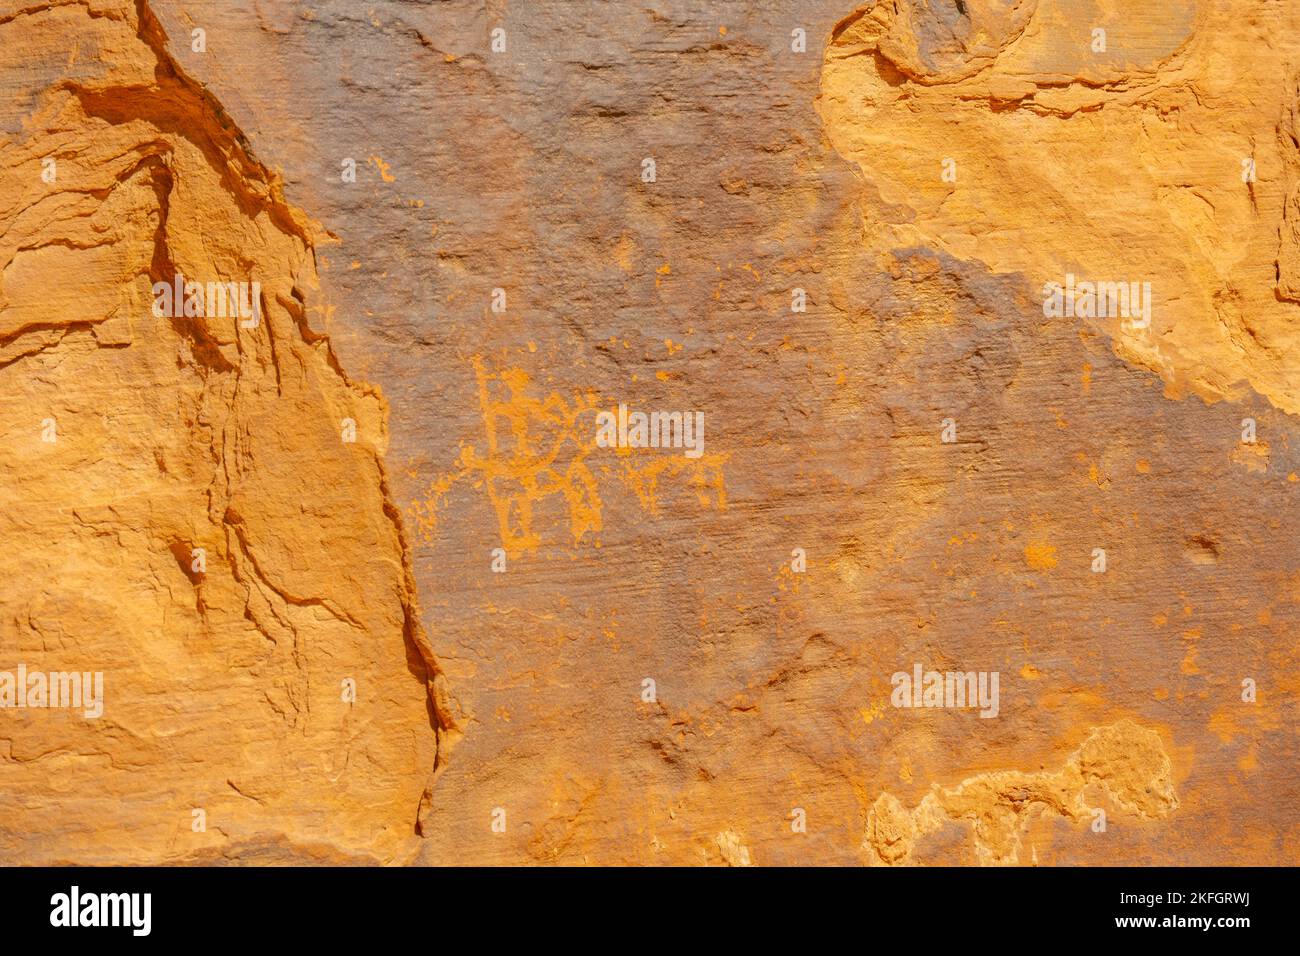 Ancient rock art on cliff face in Wadi Rum Jordan Stock Photo